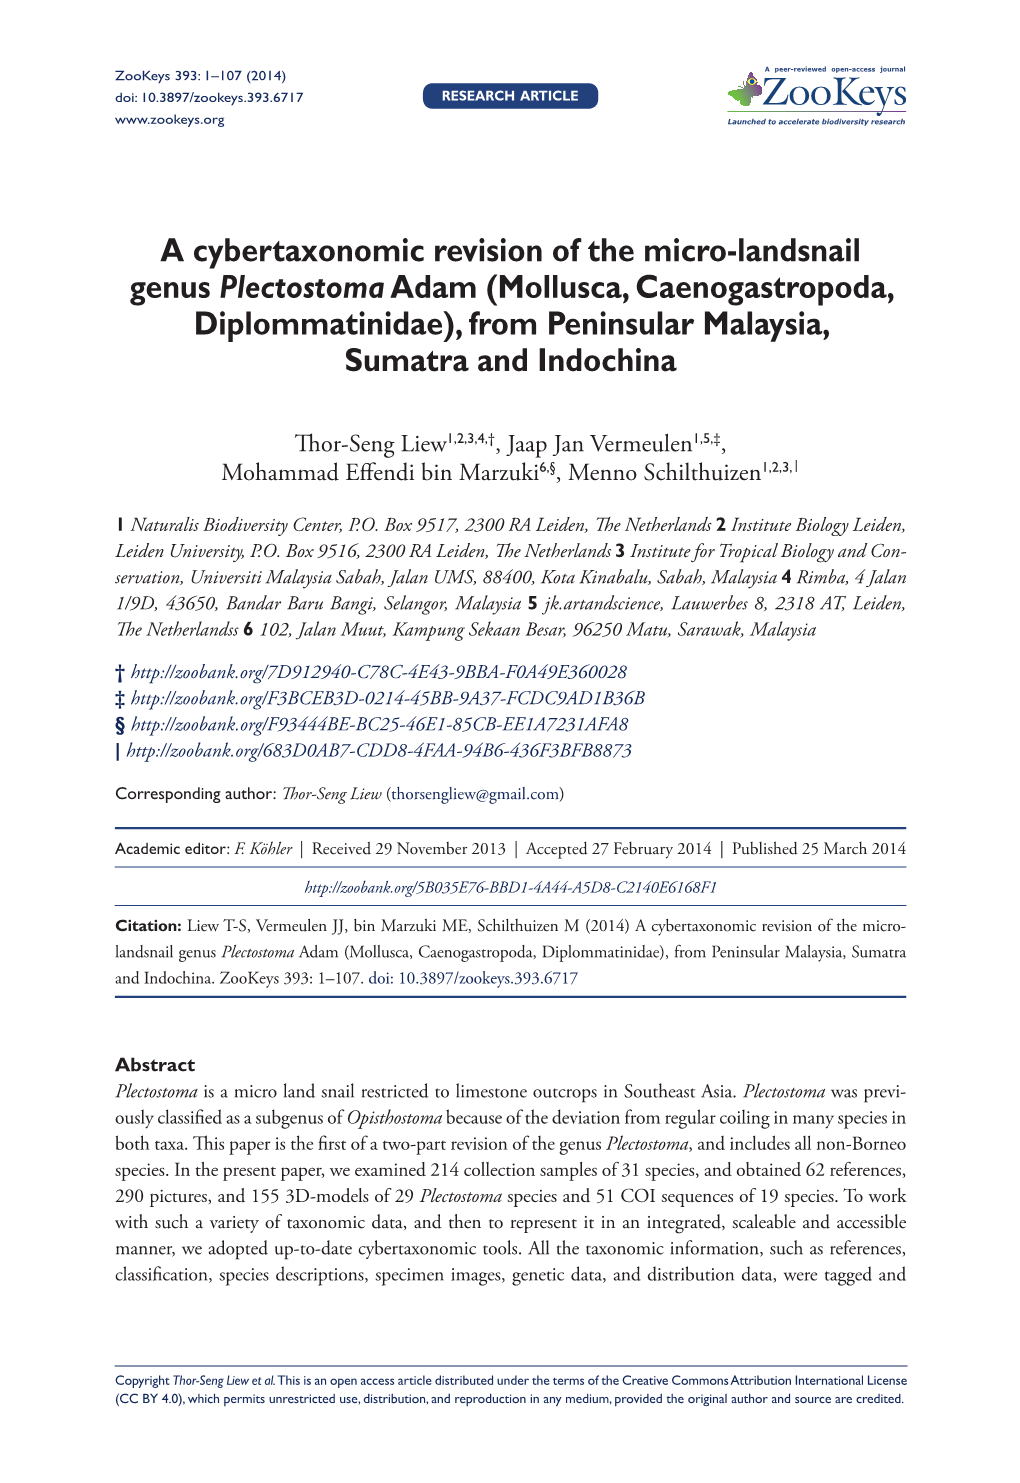 A Cybertaxonomic Revision of the Micro-Landsnail Genus Plectostoma Adam (Mollusca, Caenogastropoda, Diplommatinidae), from Peninsular Malaysia, Sumatra and Indochina